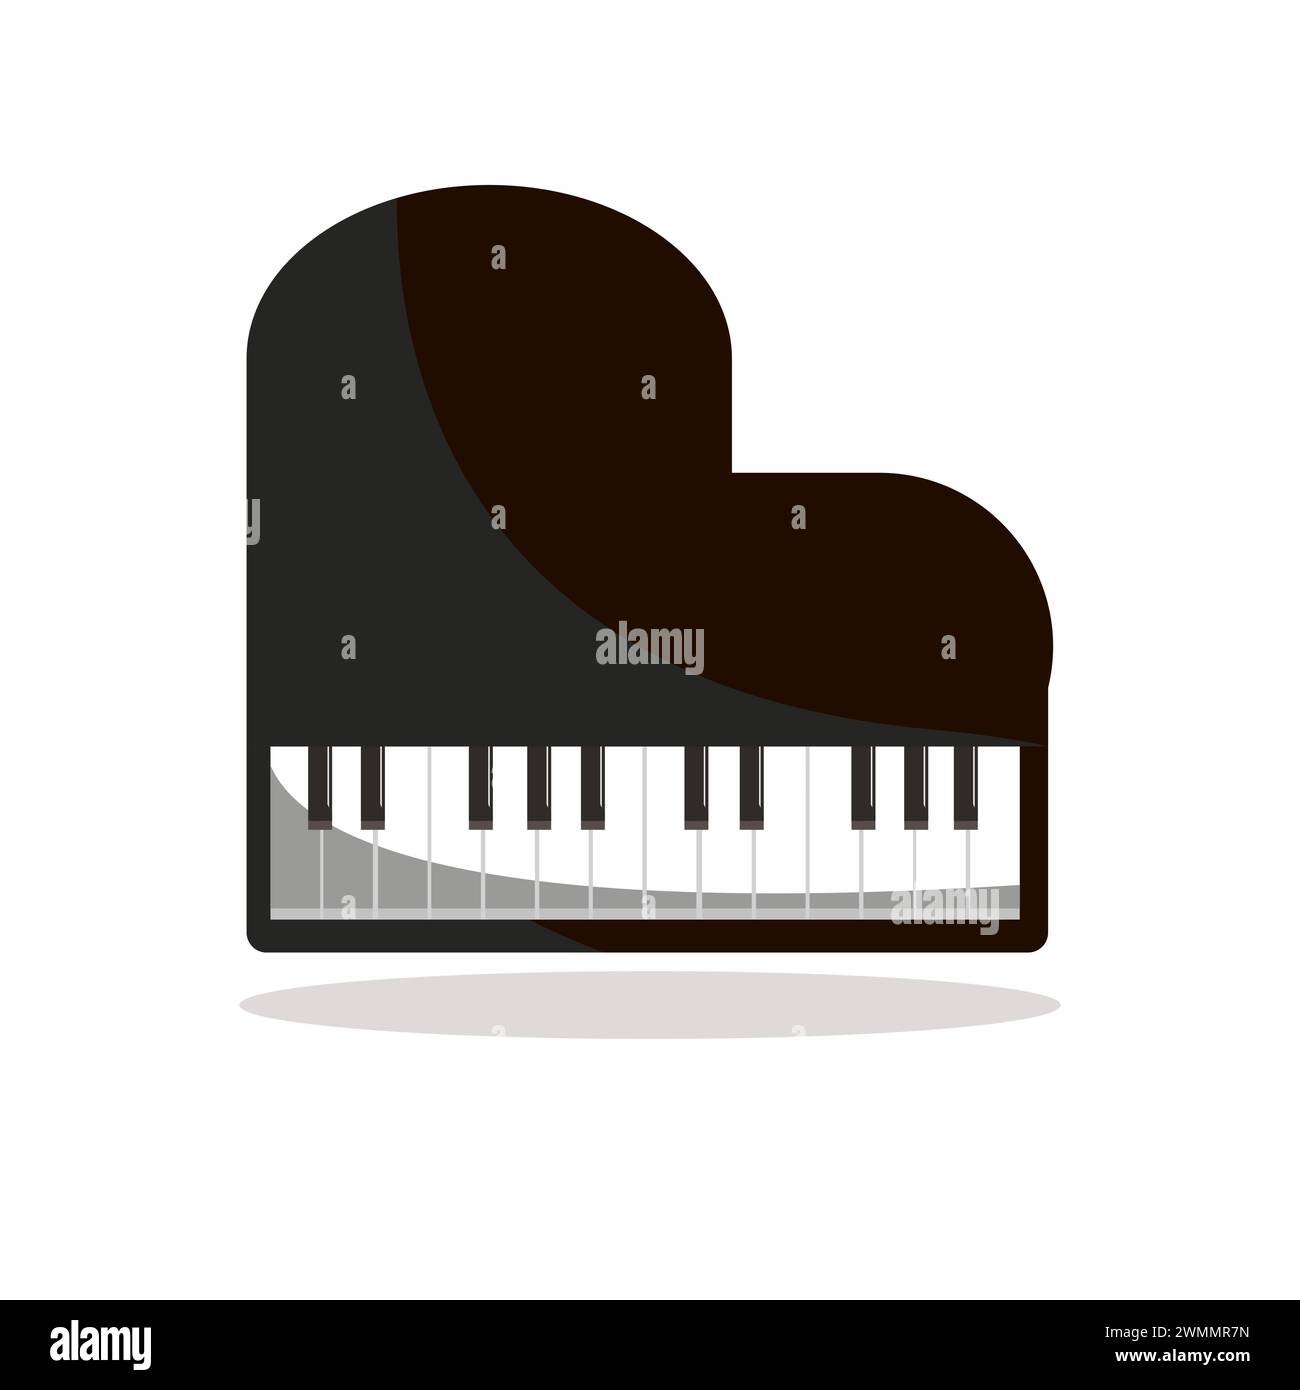 Art illustration icon logo music tools design concept symbol of piano Stock Vector